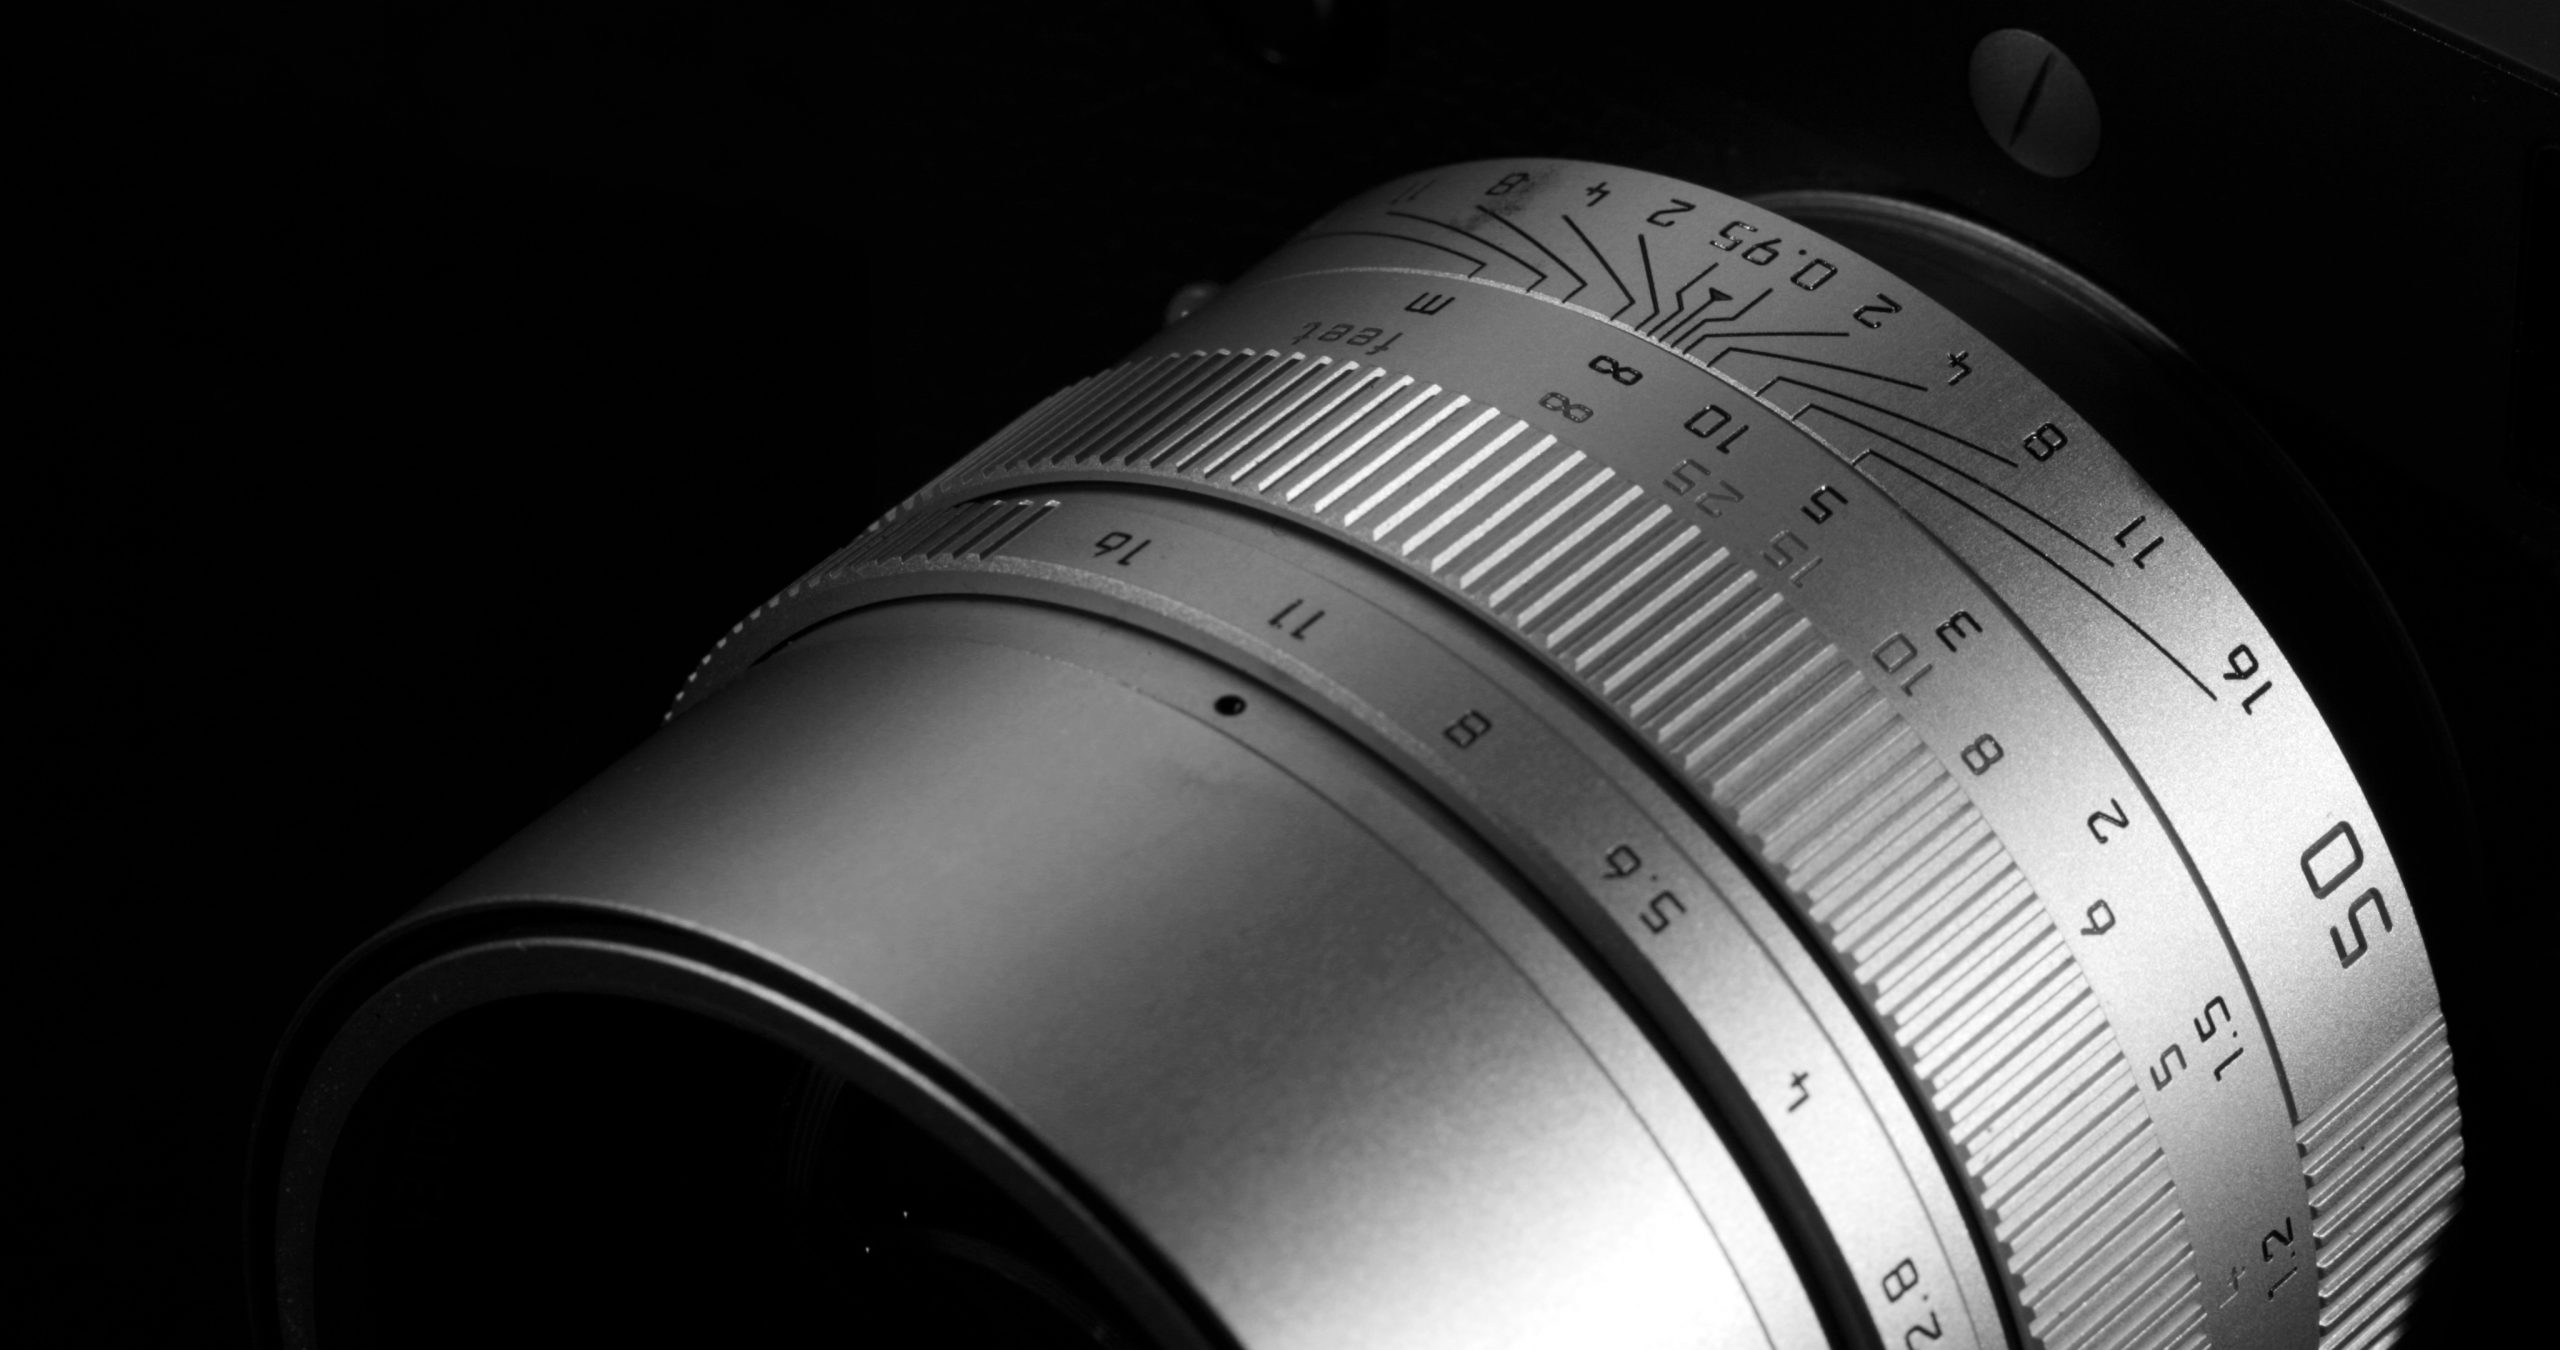 Leica Noctilux 50mm Lens – A Historical Review - Leica Review - Oz Yilmaz